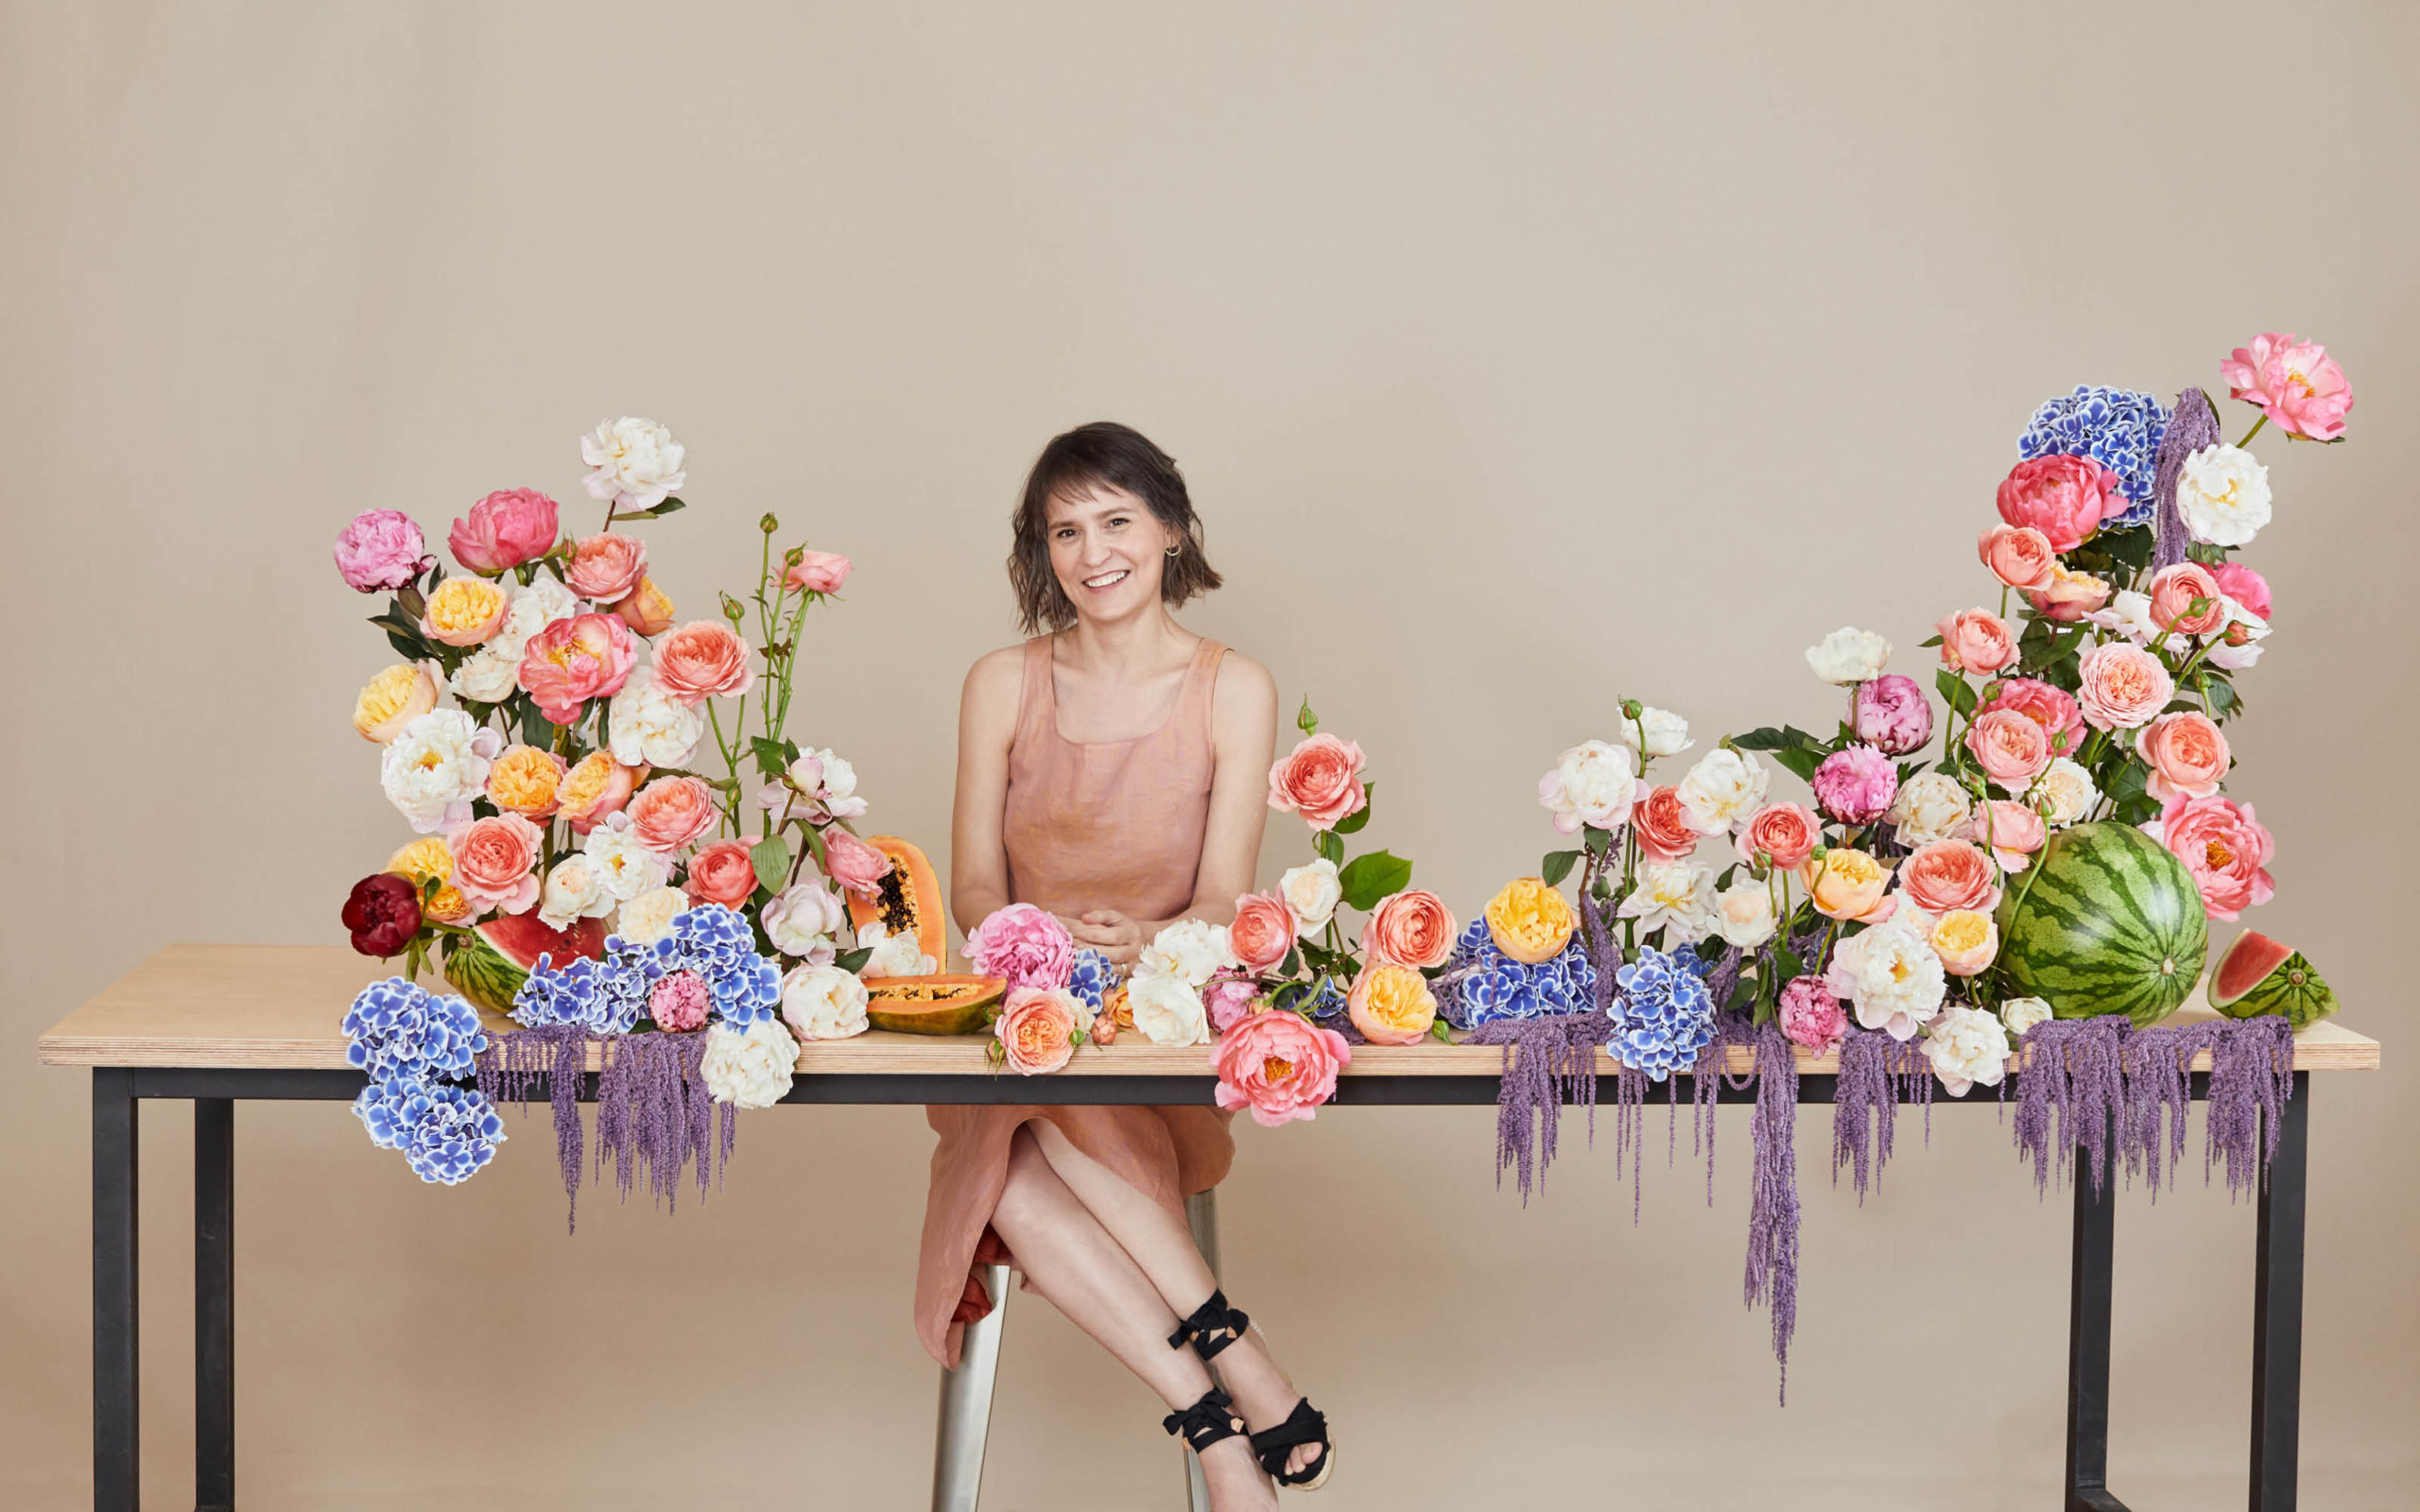 Madrid Flower School founder Sylvia Bustamante Gubbins sitting behind a table of flowers